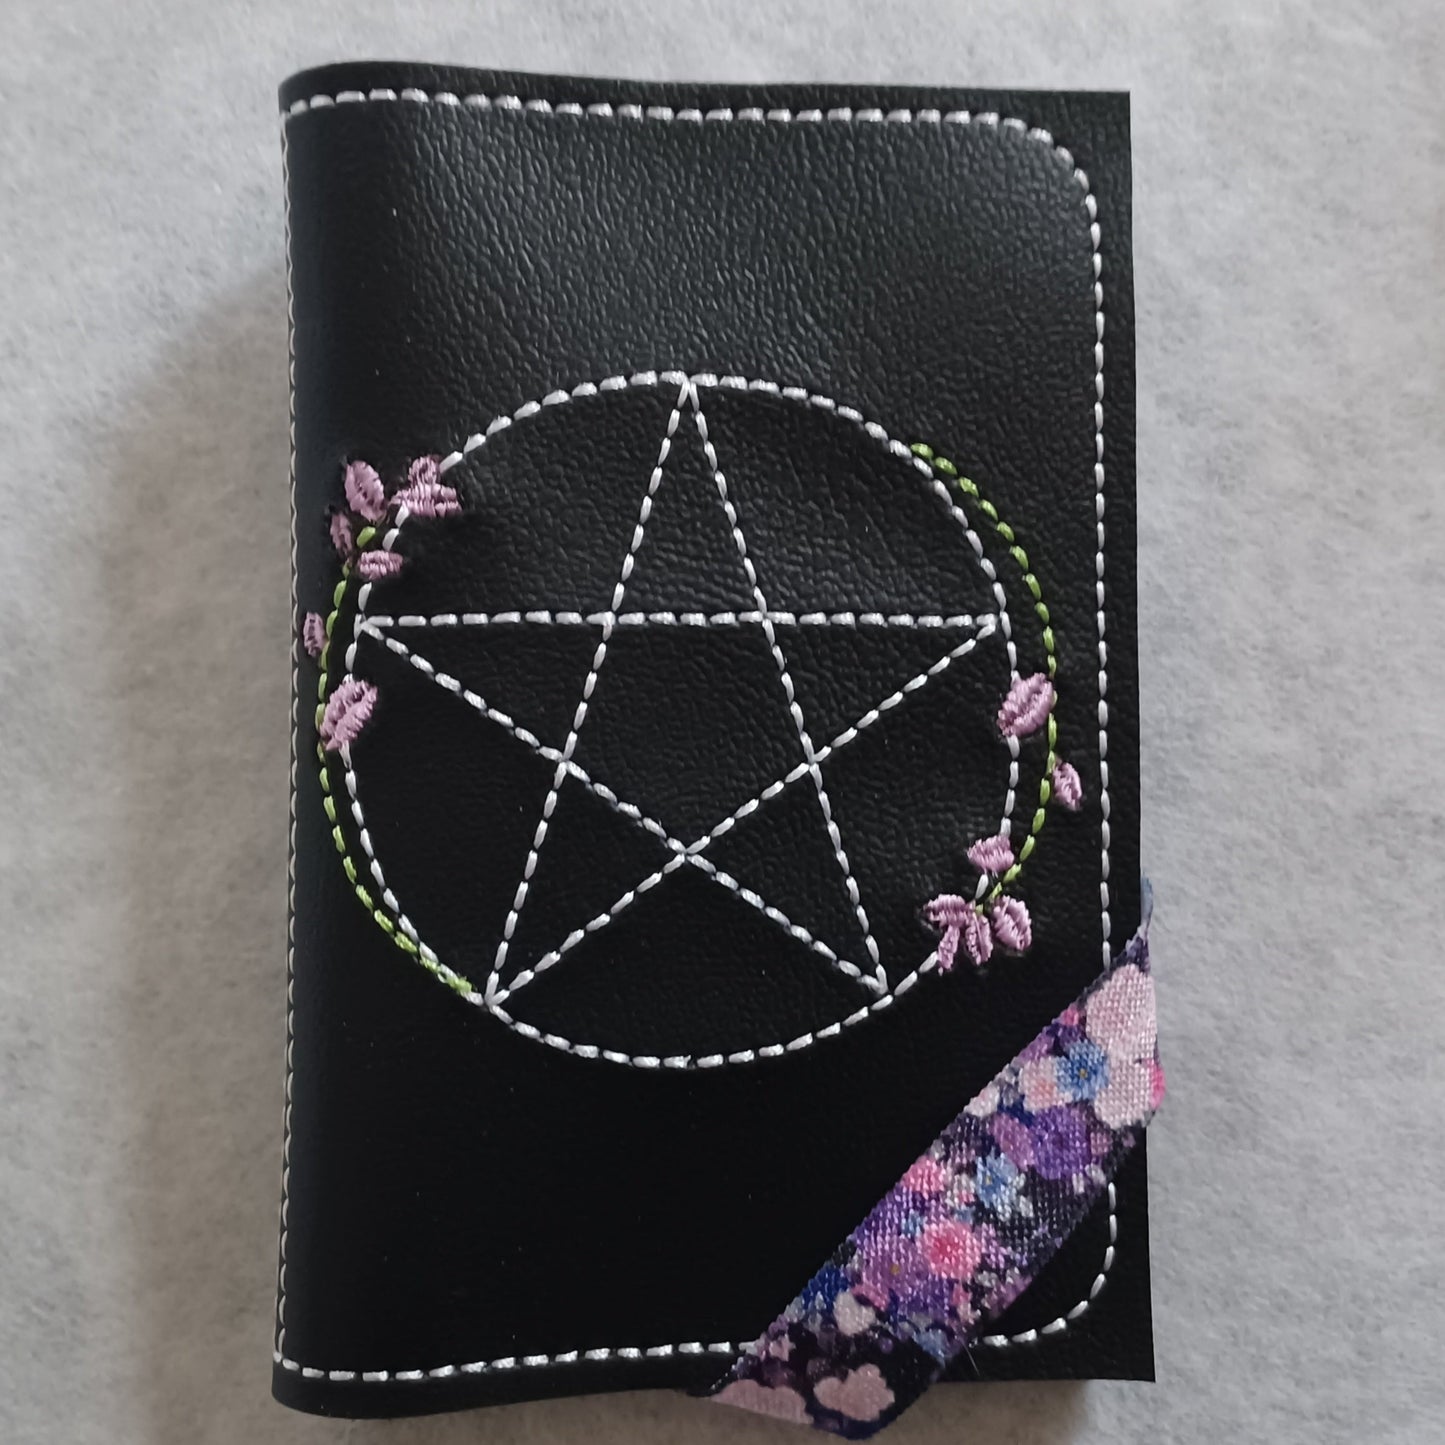 Pentagram Embroidered Notebook Cover